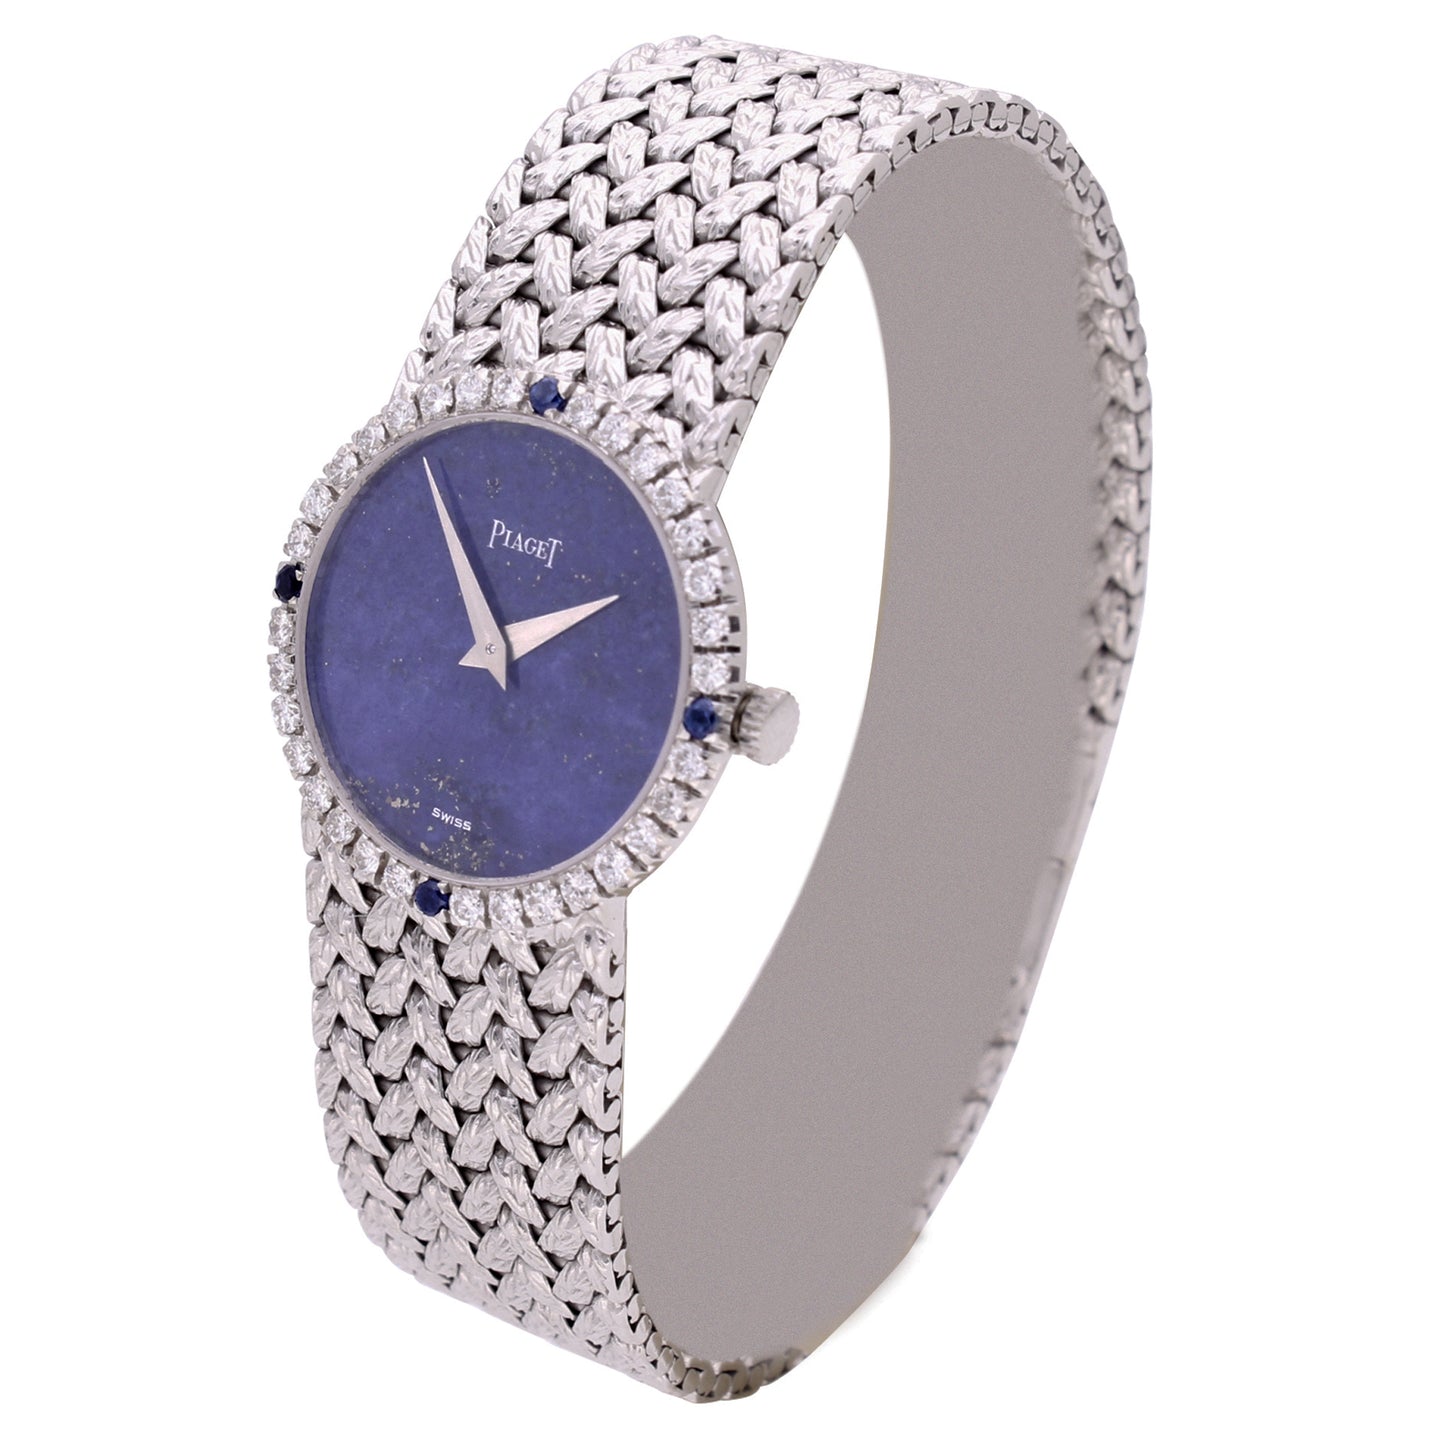 18ct white gold Piaget bracelet watch with lapis lazuli dial and diamond set bezel . Made 1970